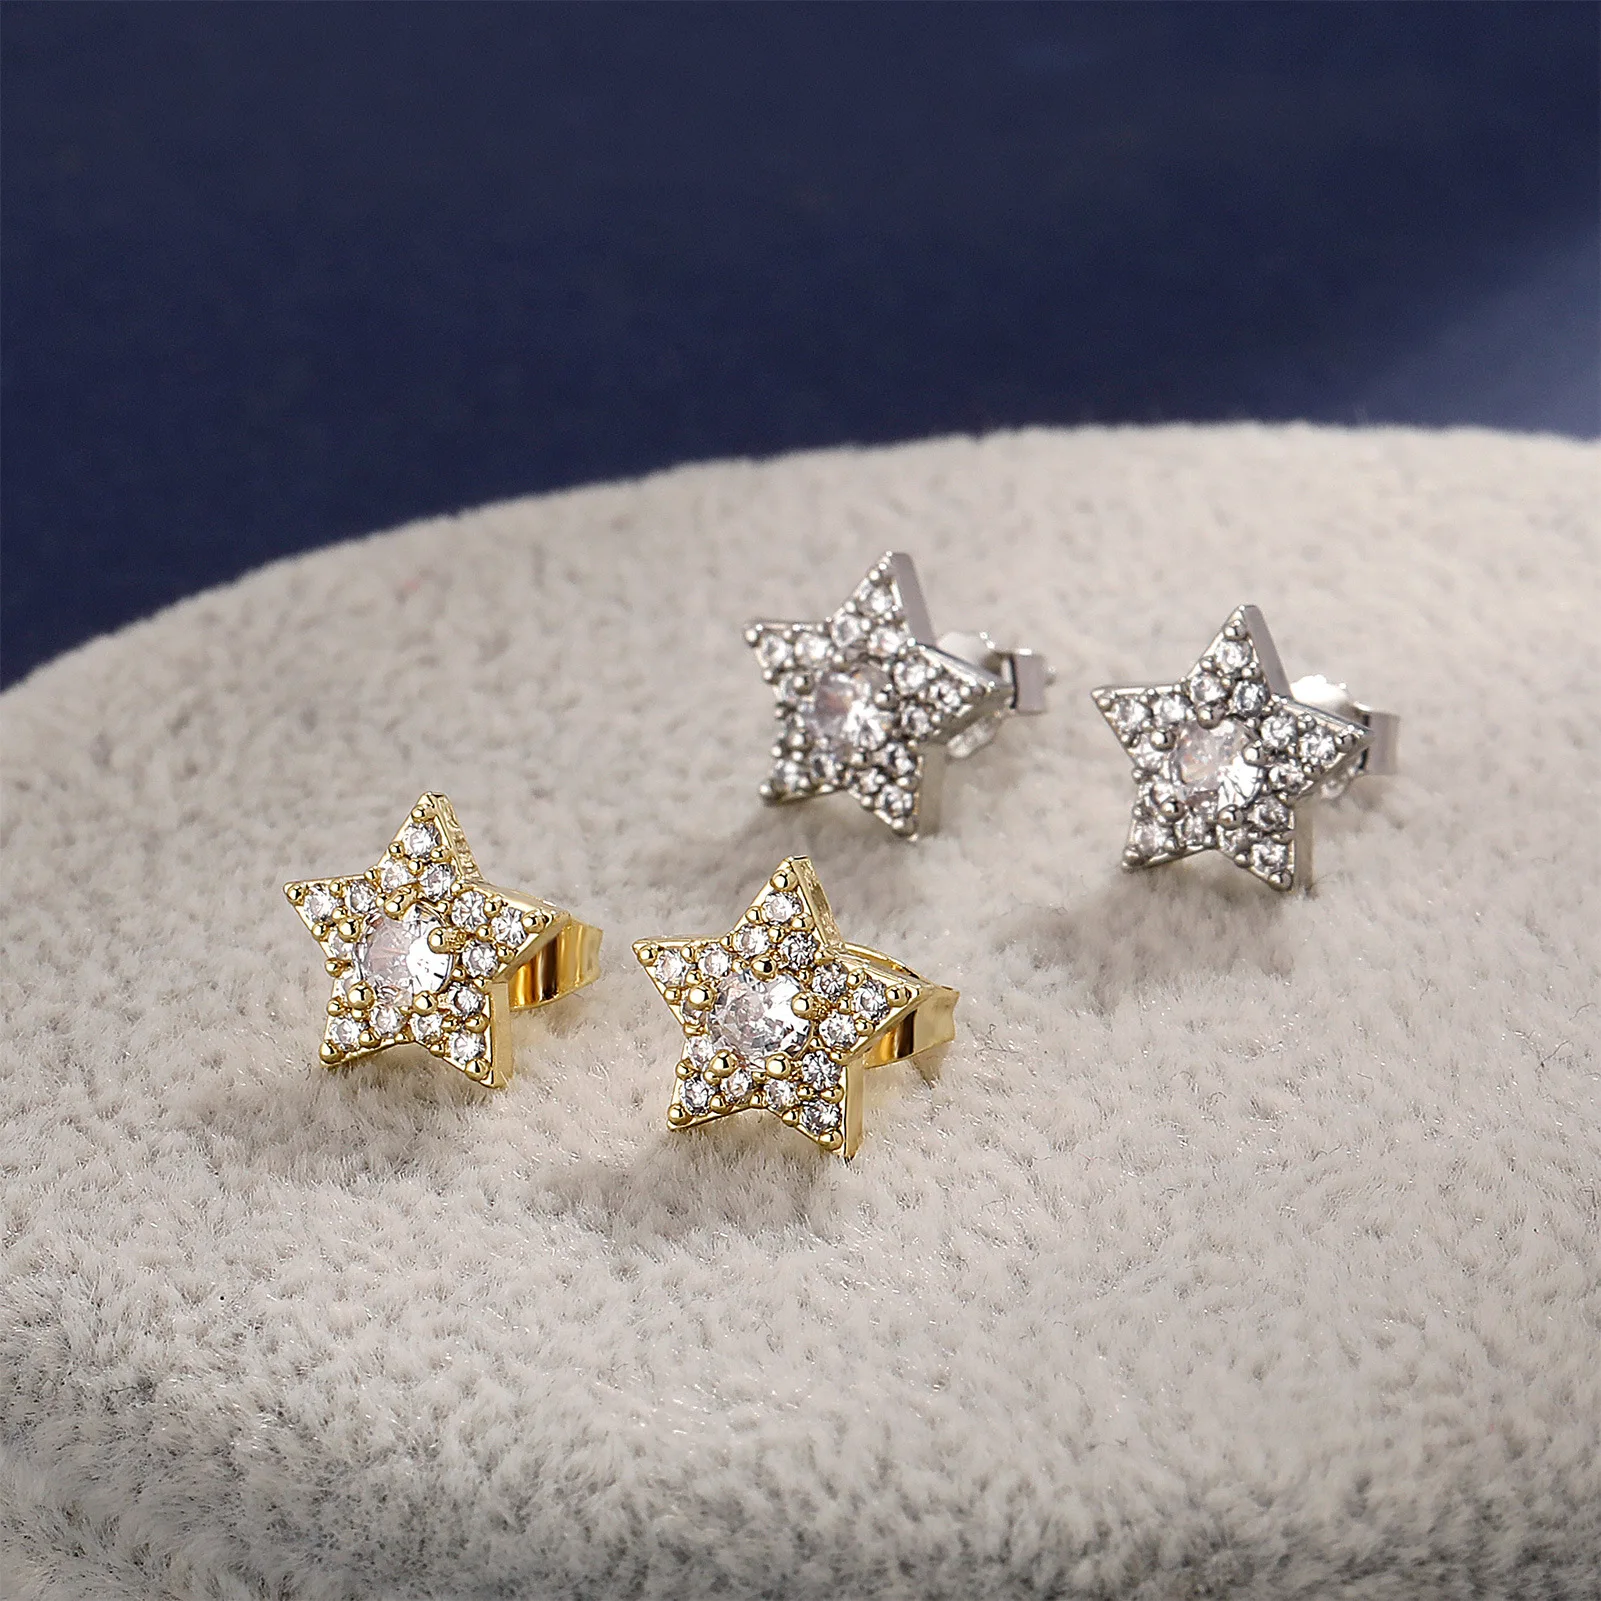 Top Icy Iced Out Star Stud Diamond Earrings 18K Gold Plated Fine Jewelry Earrings Women Jewelry